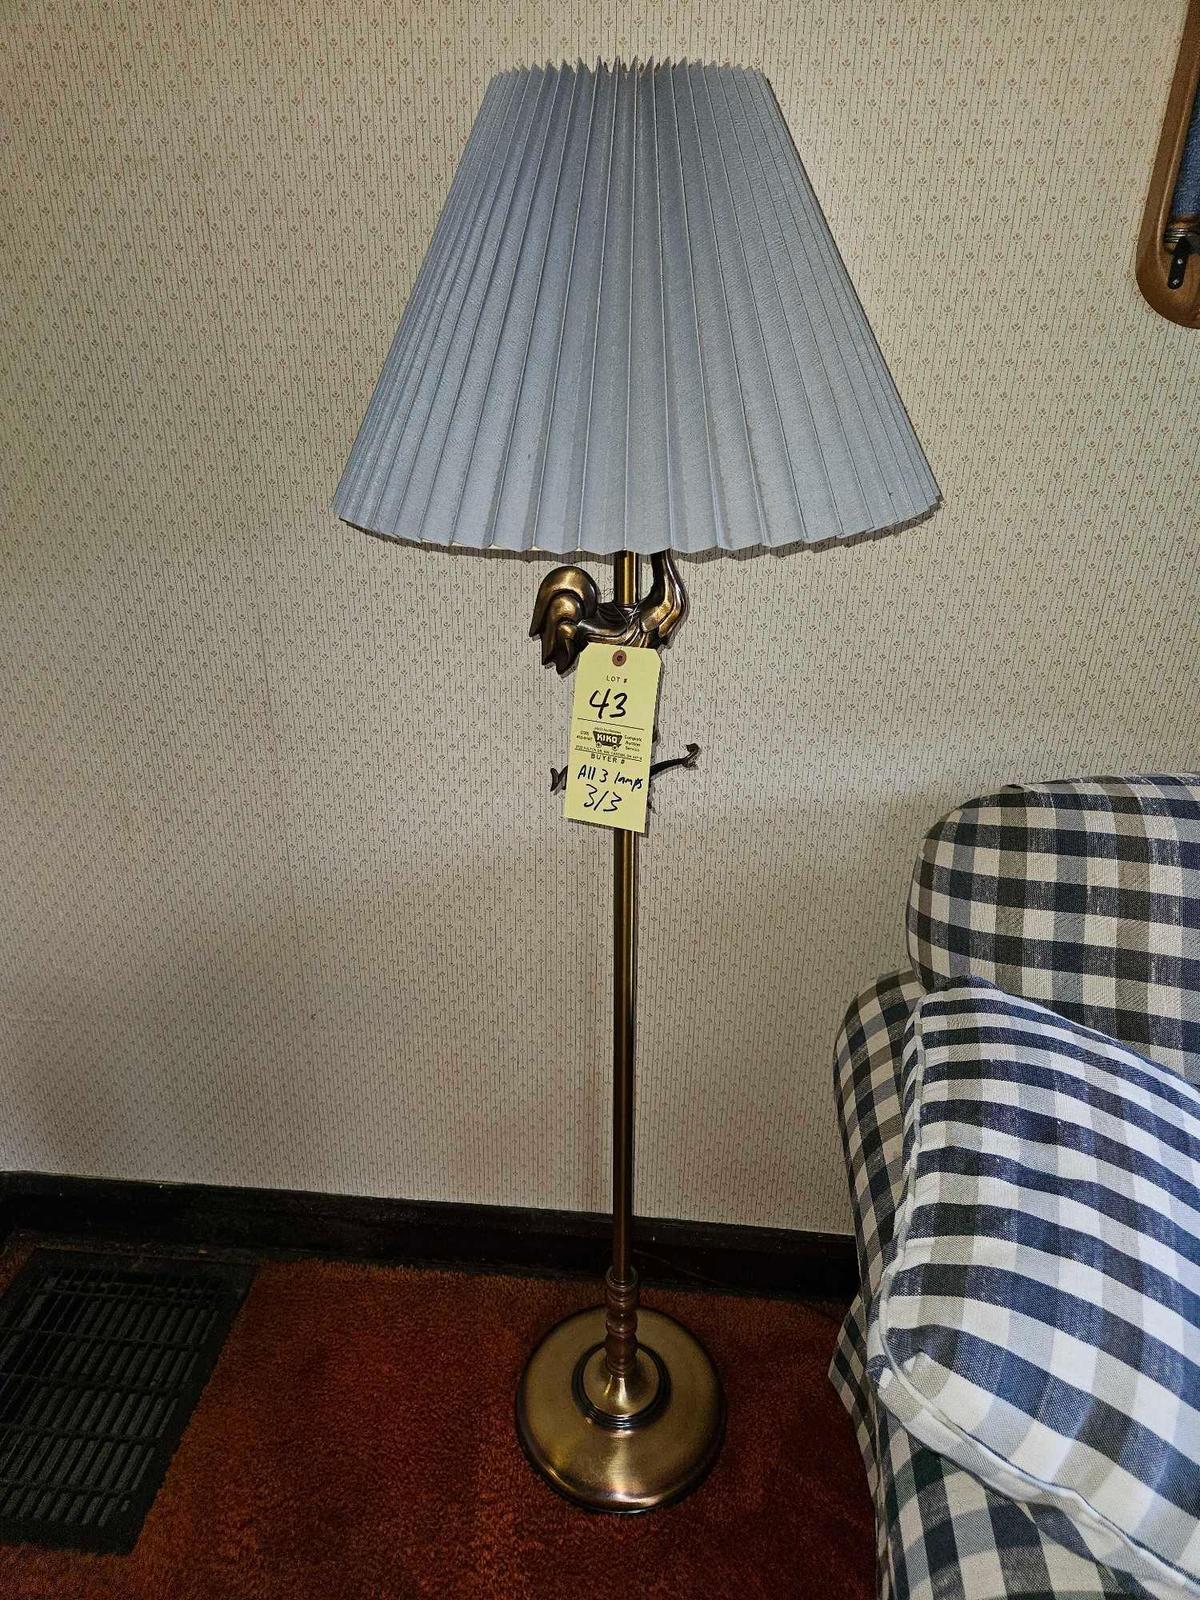 2 Crock-Base Table Lamps & Floor Lamp